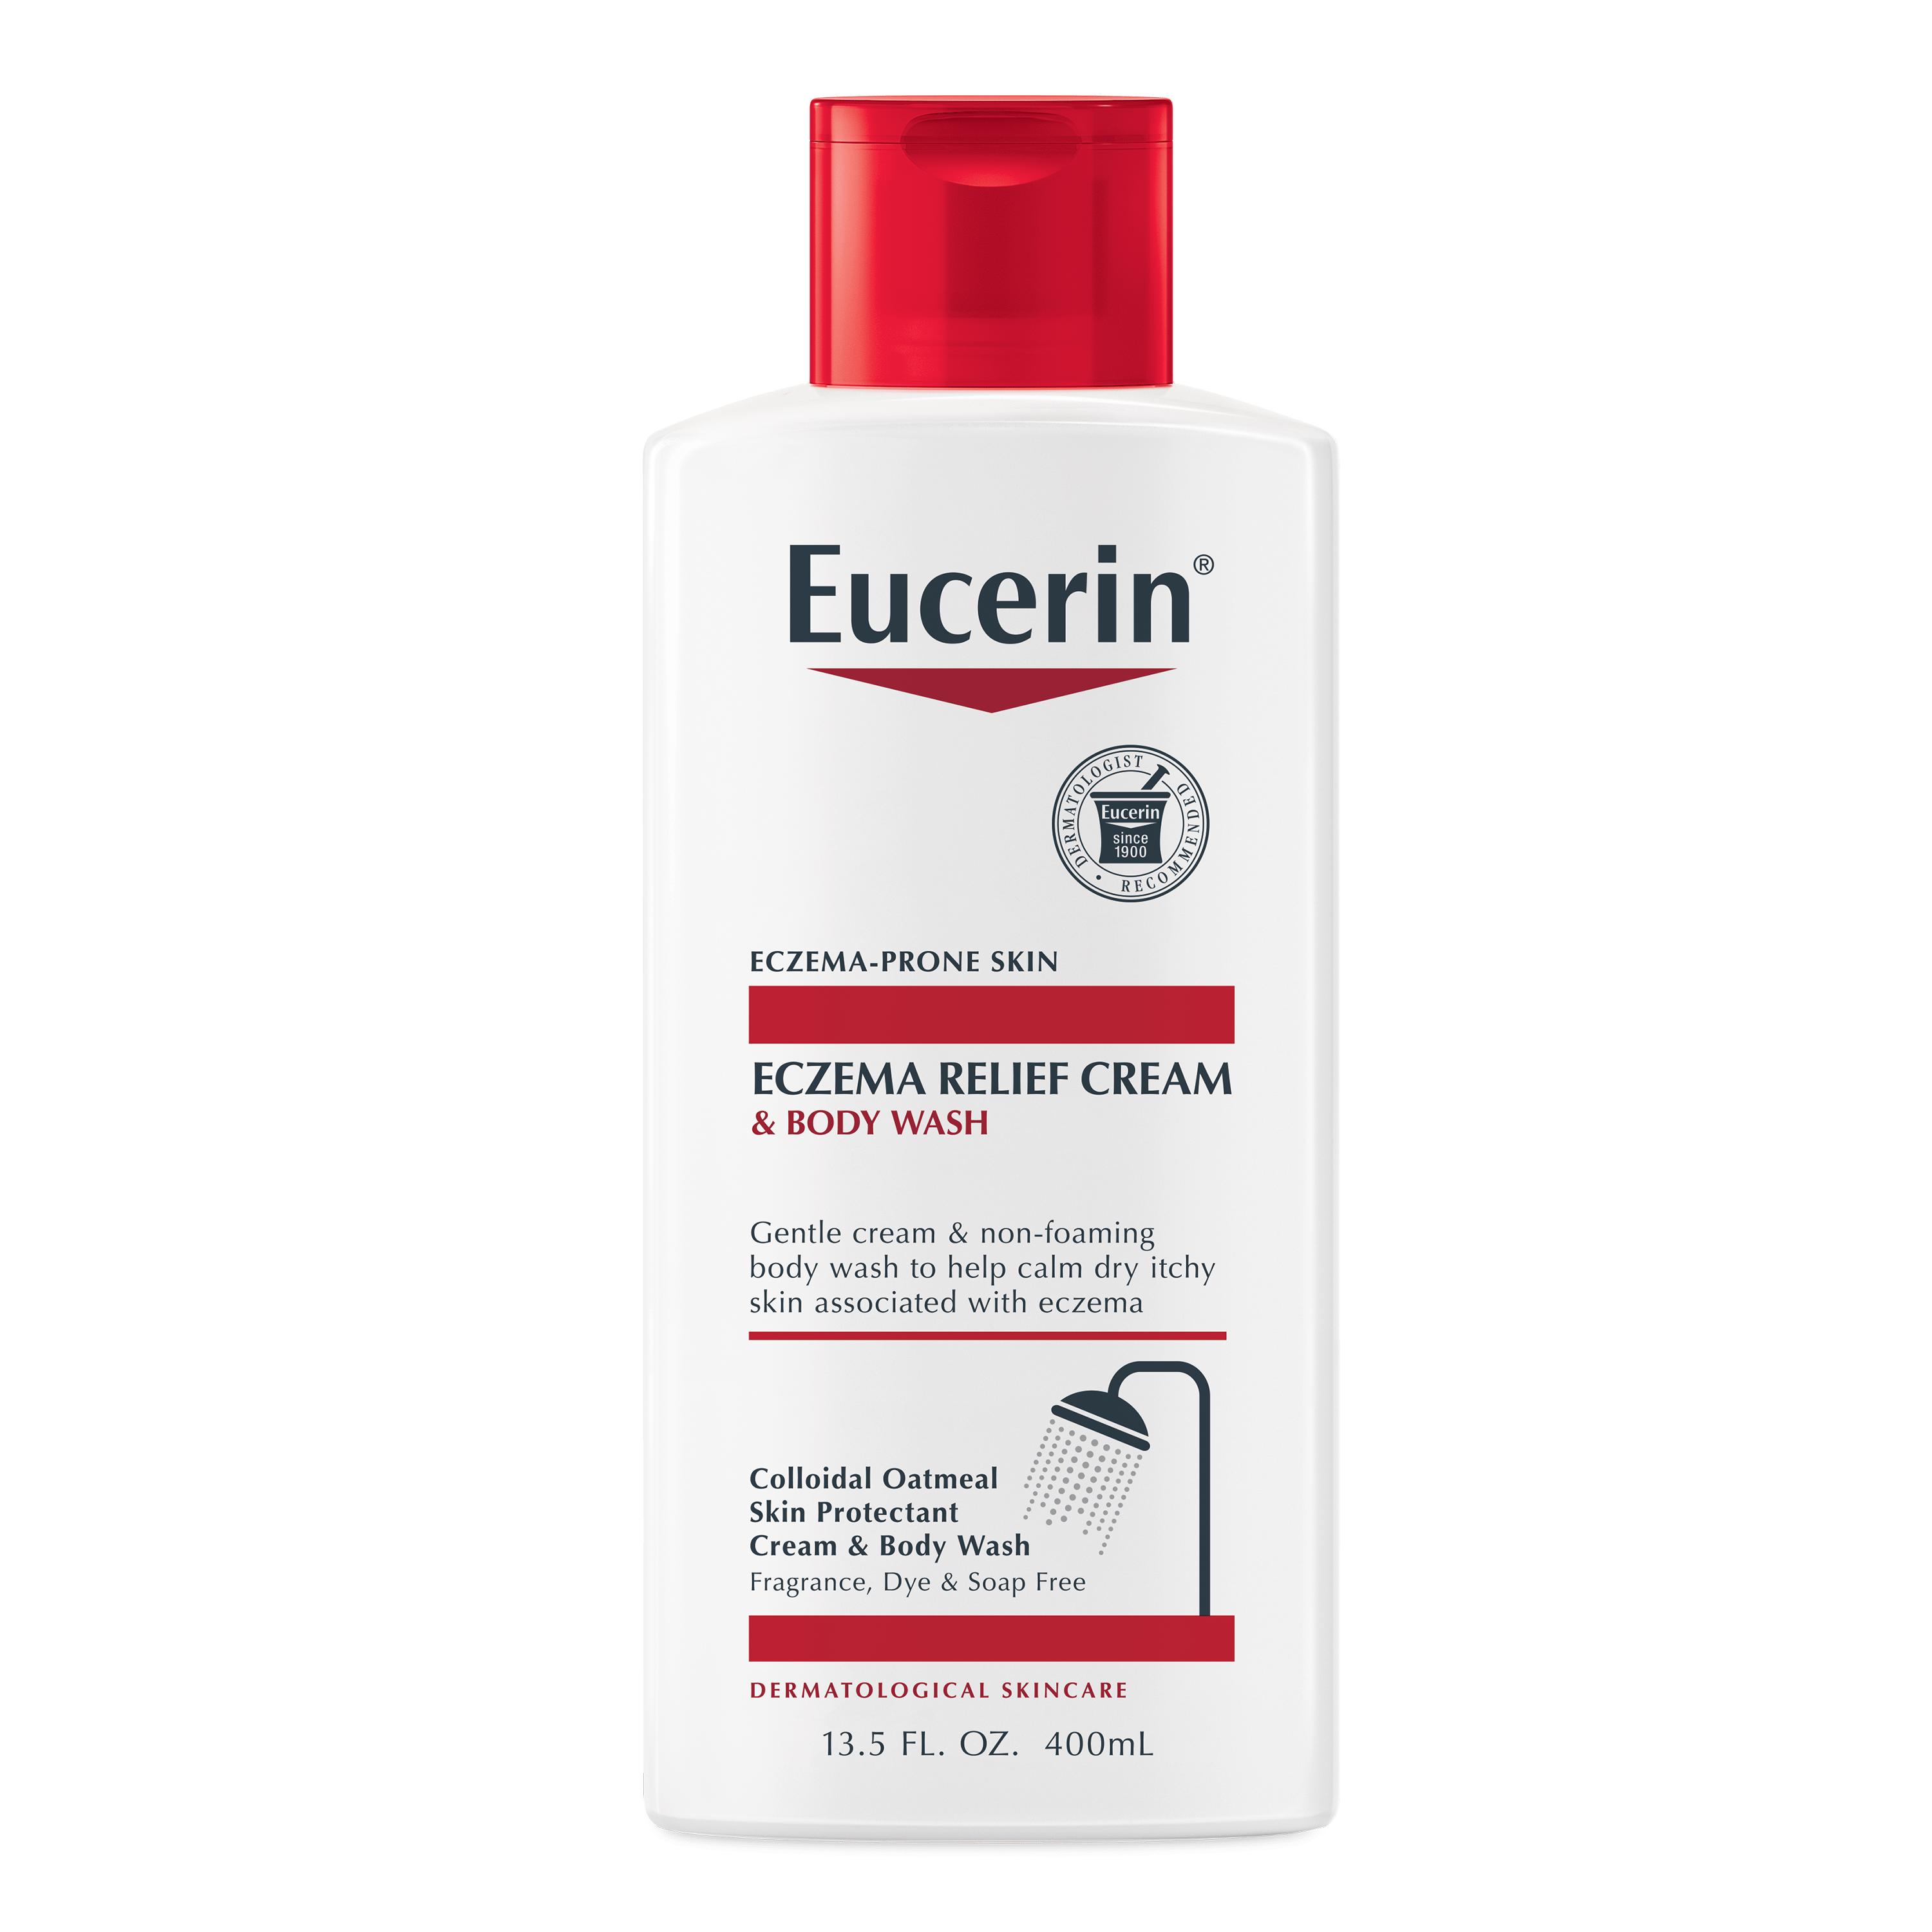 Eucerin Eczema Relief & Cream Body Wash, 13.5 Fl Oz Bottle